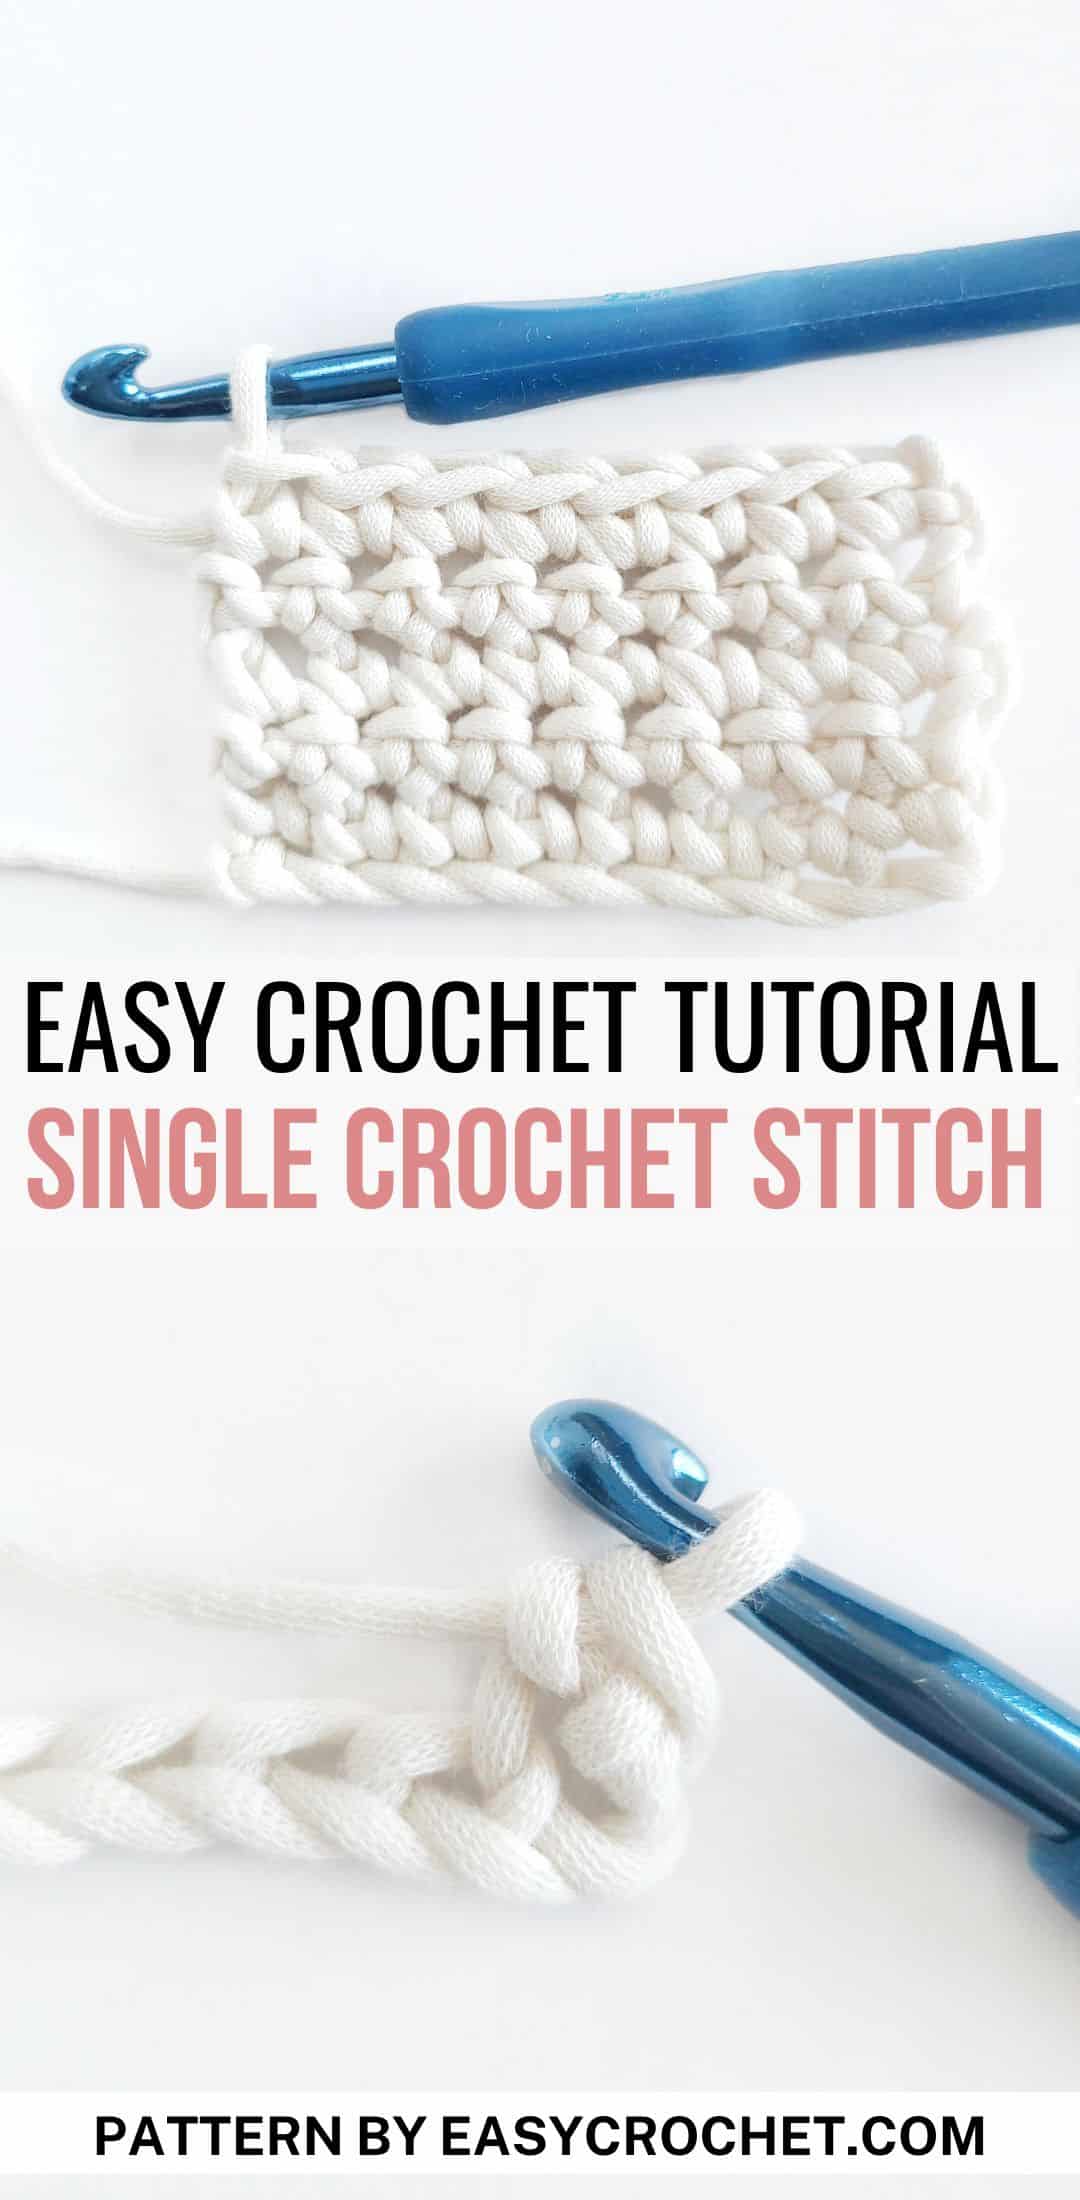 Single crochet stitch tutorial by easycrochet.com